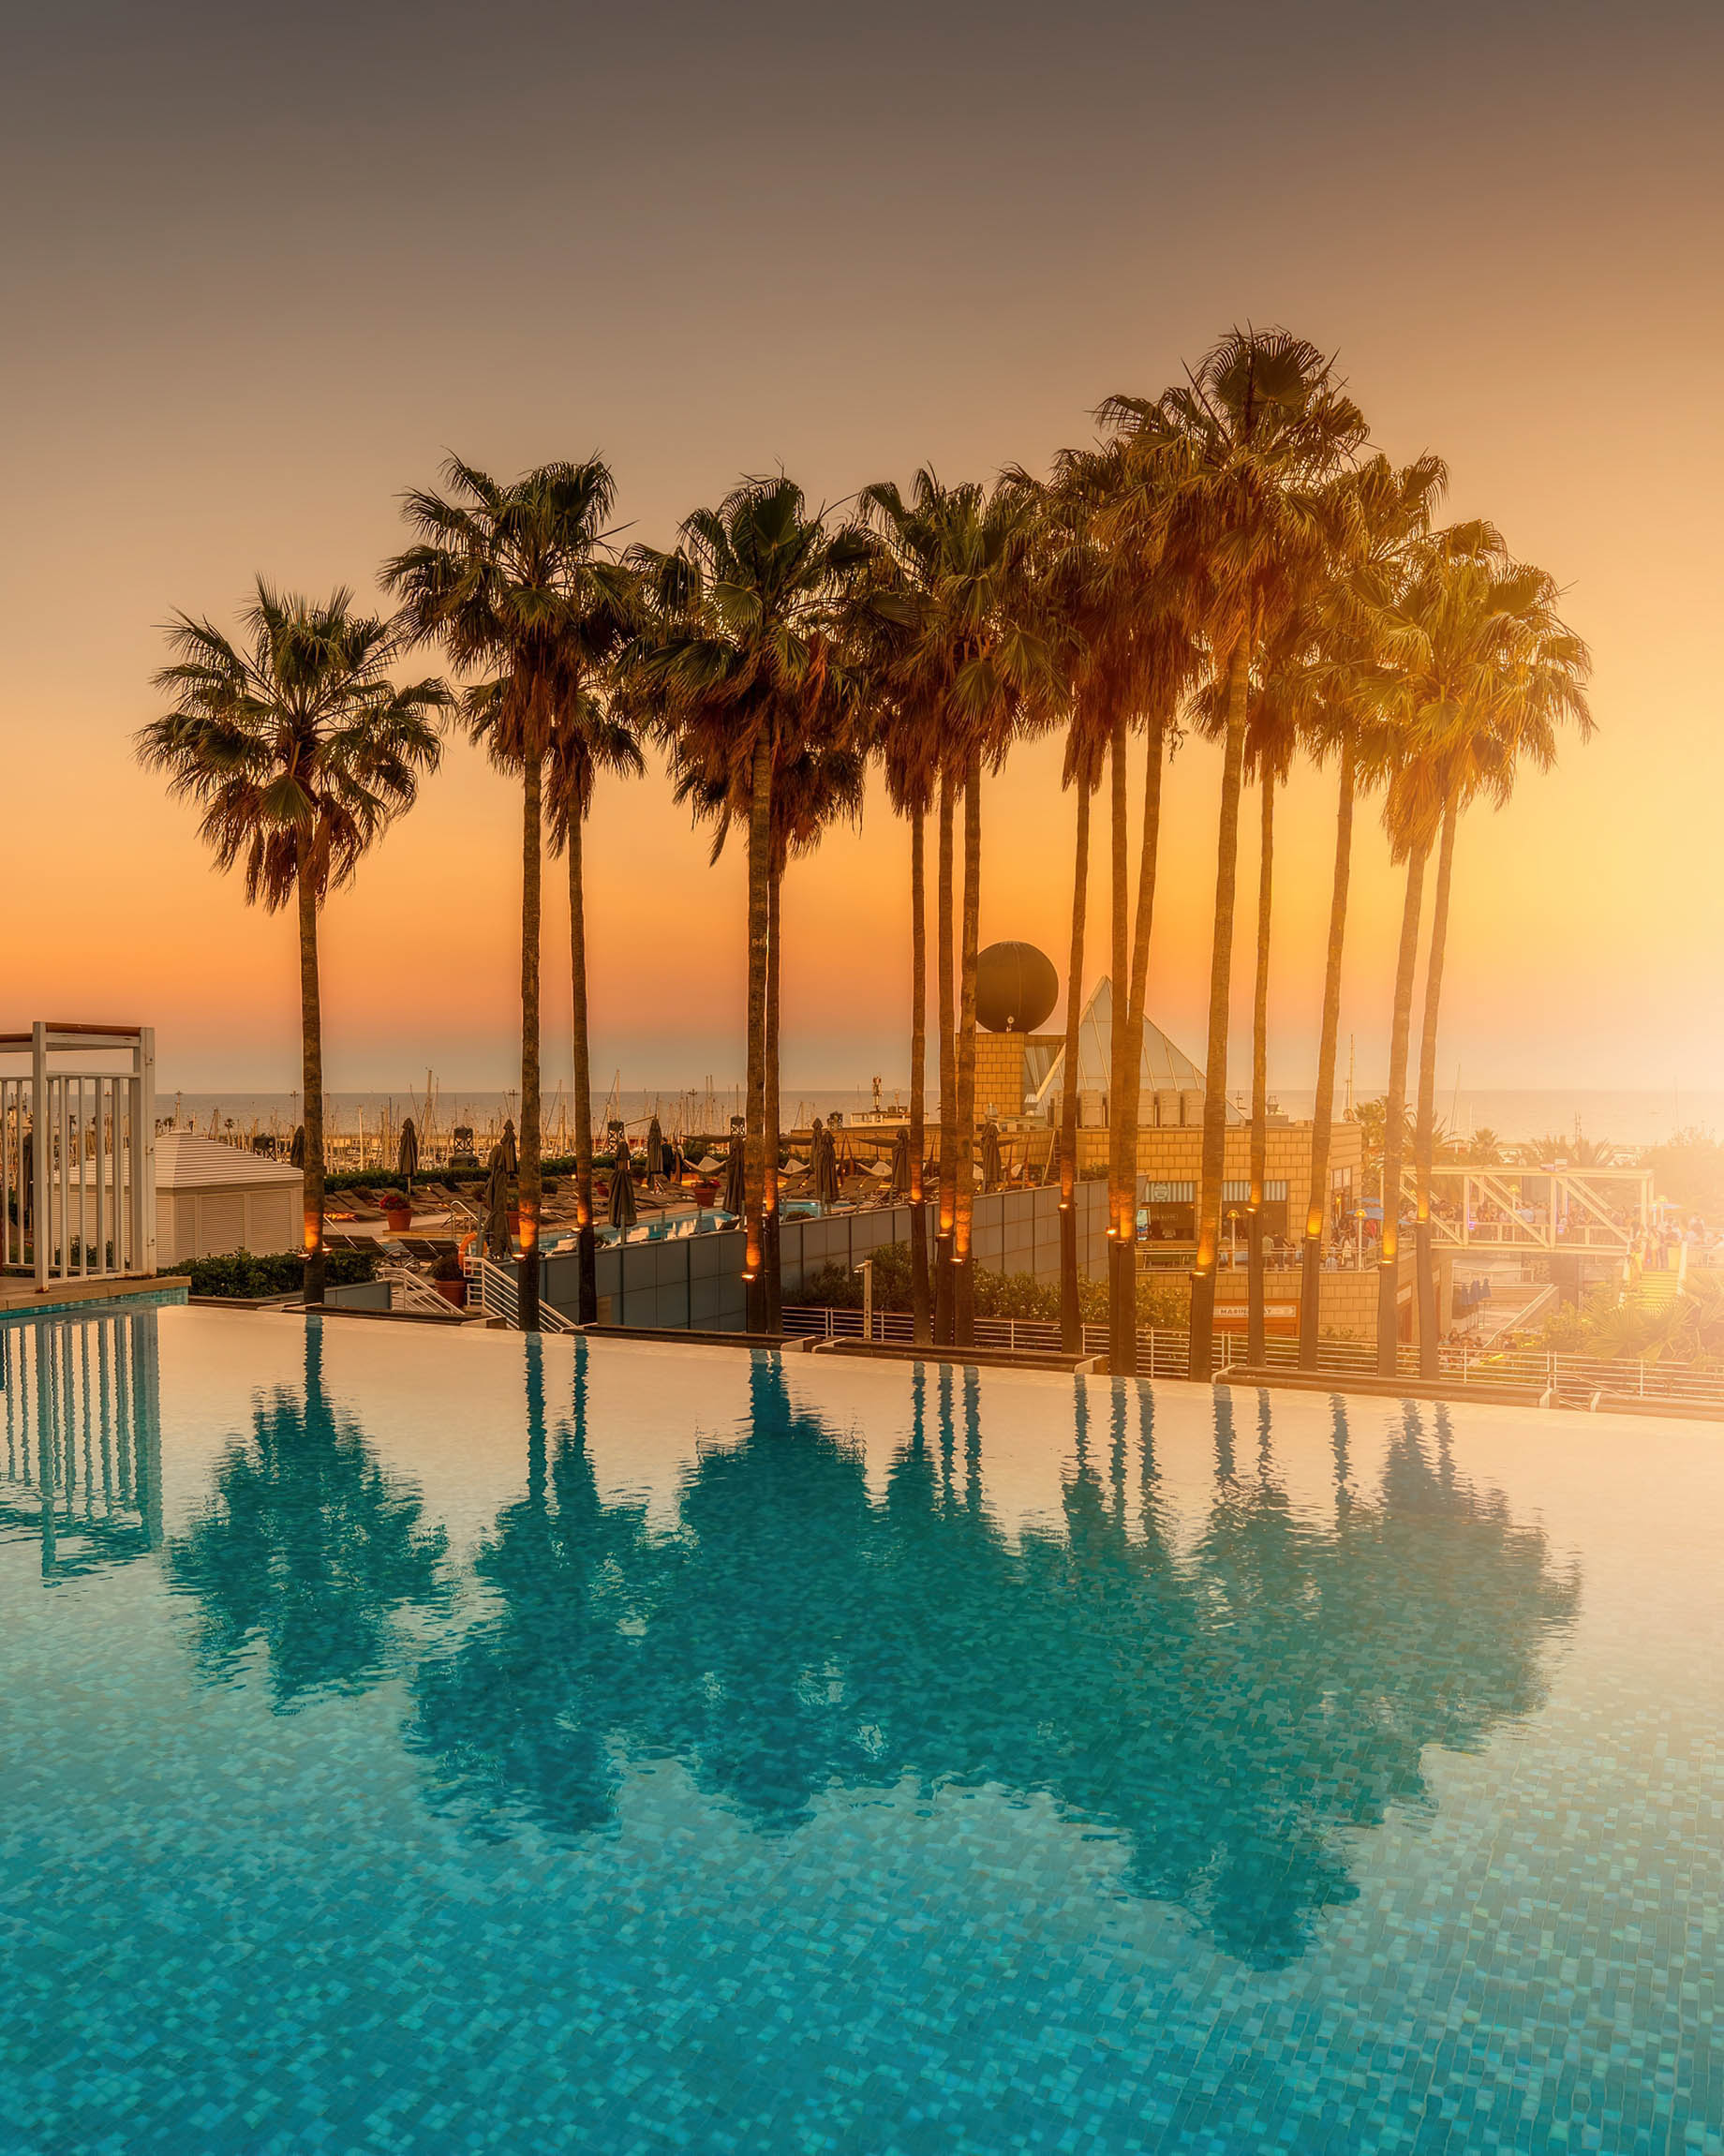 Hotel Arts Barcelona Ritz-Carlton – Barcelona, Spain – Infinity Pool Sunset